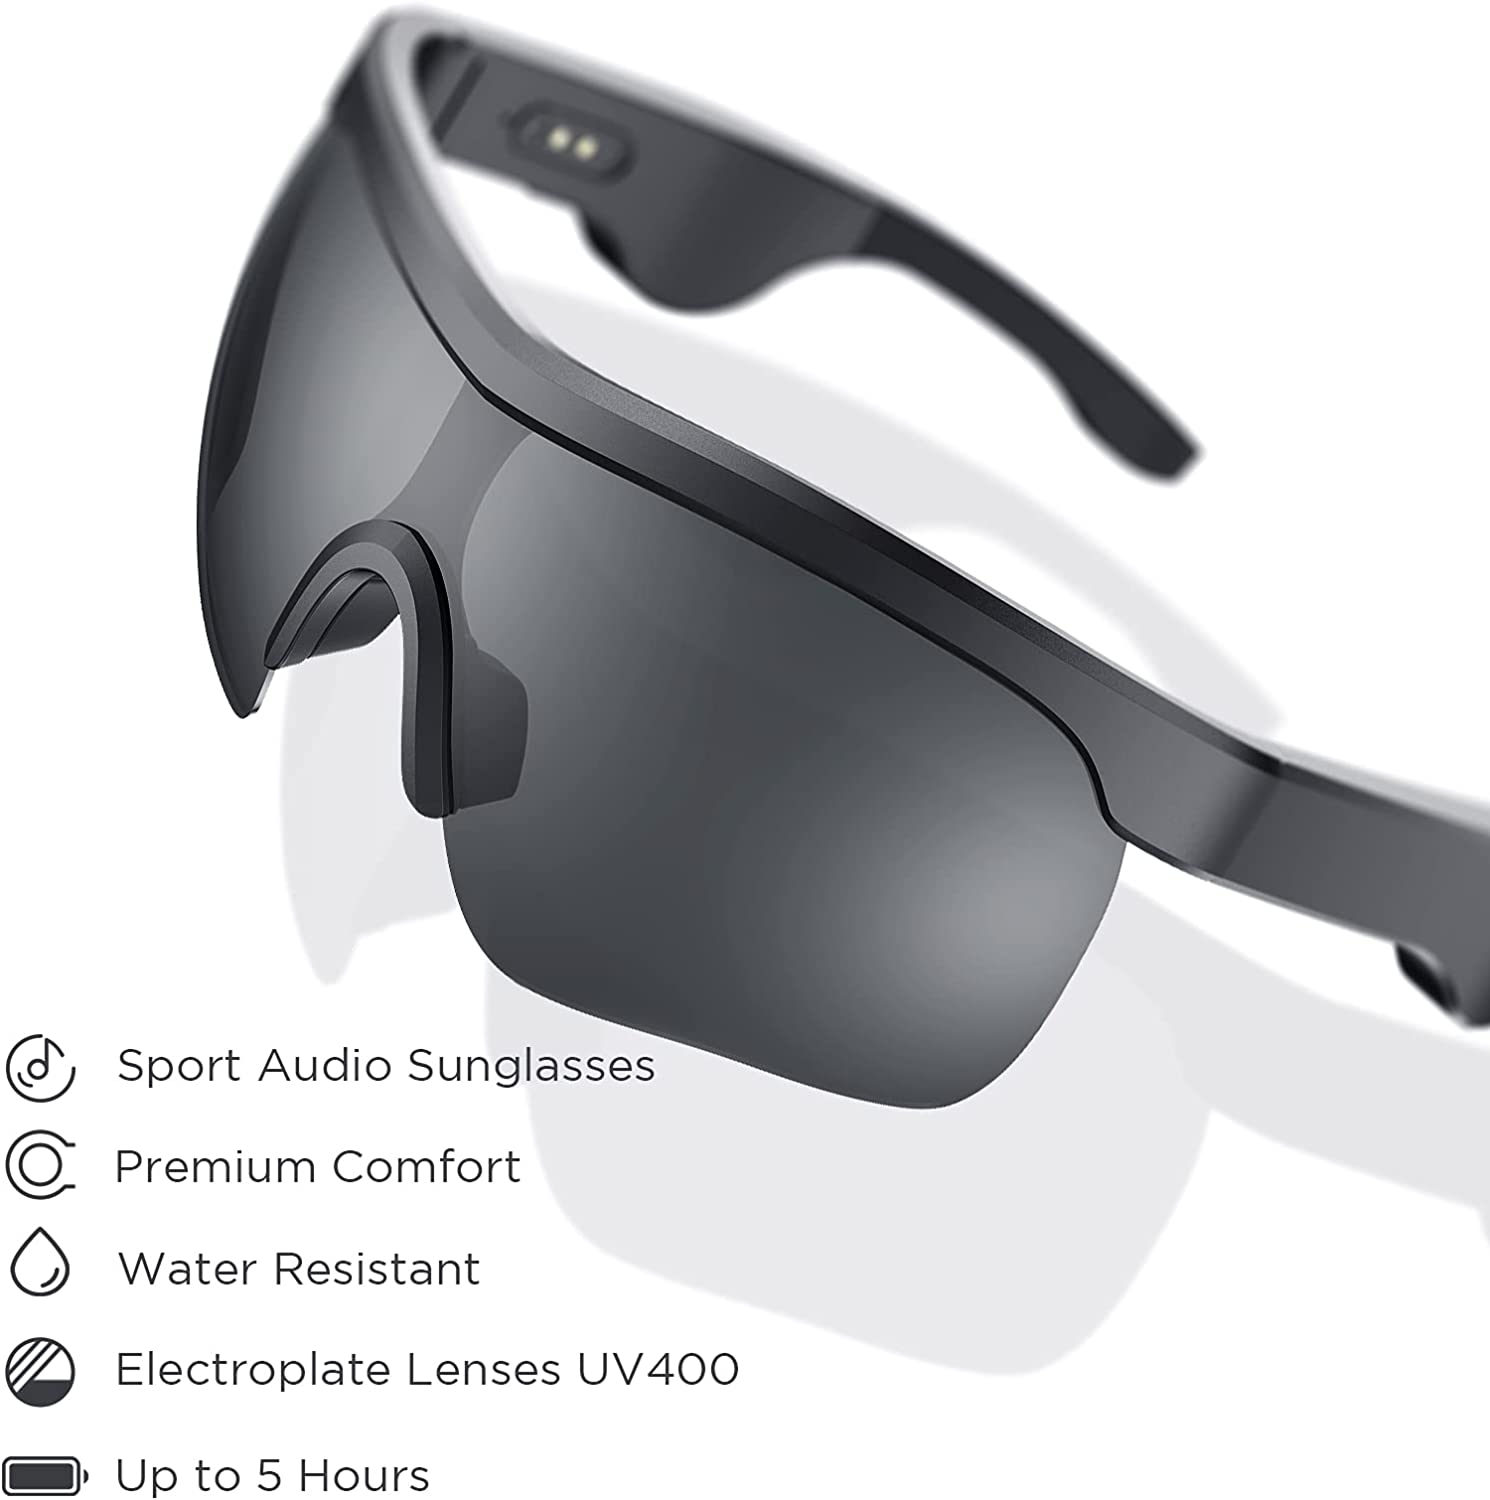 Cowin Sound Shades Smart Audio Sports Sunglasses, Black Cowinaudio 